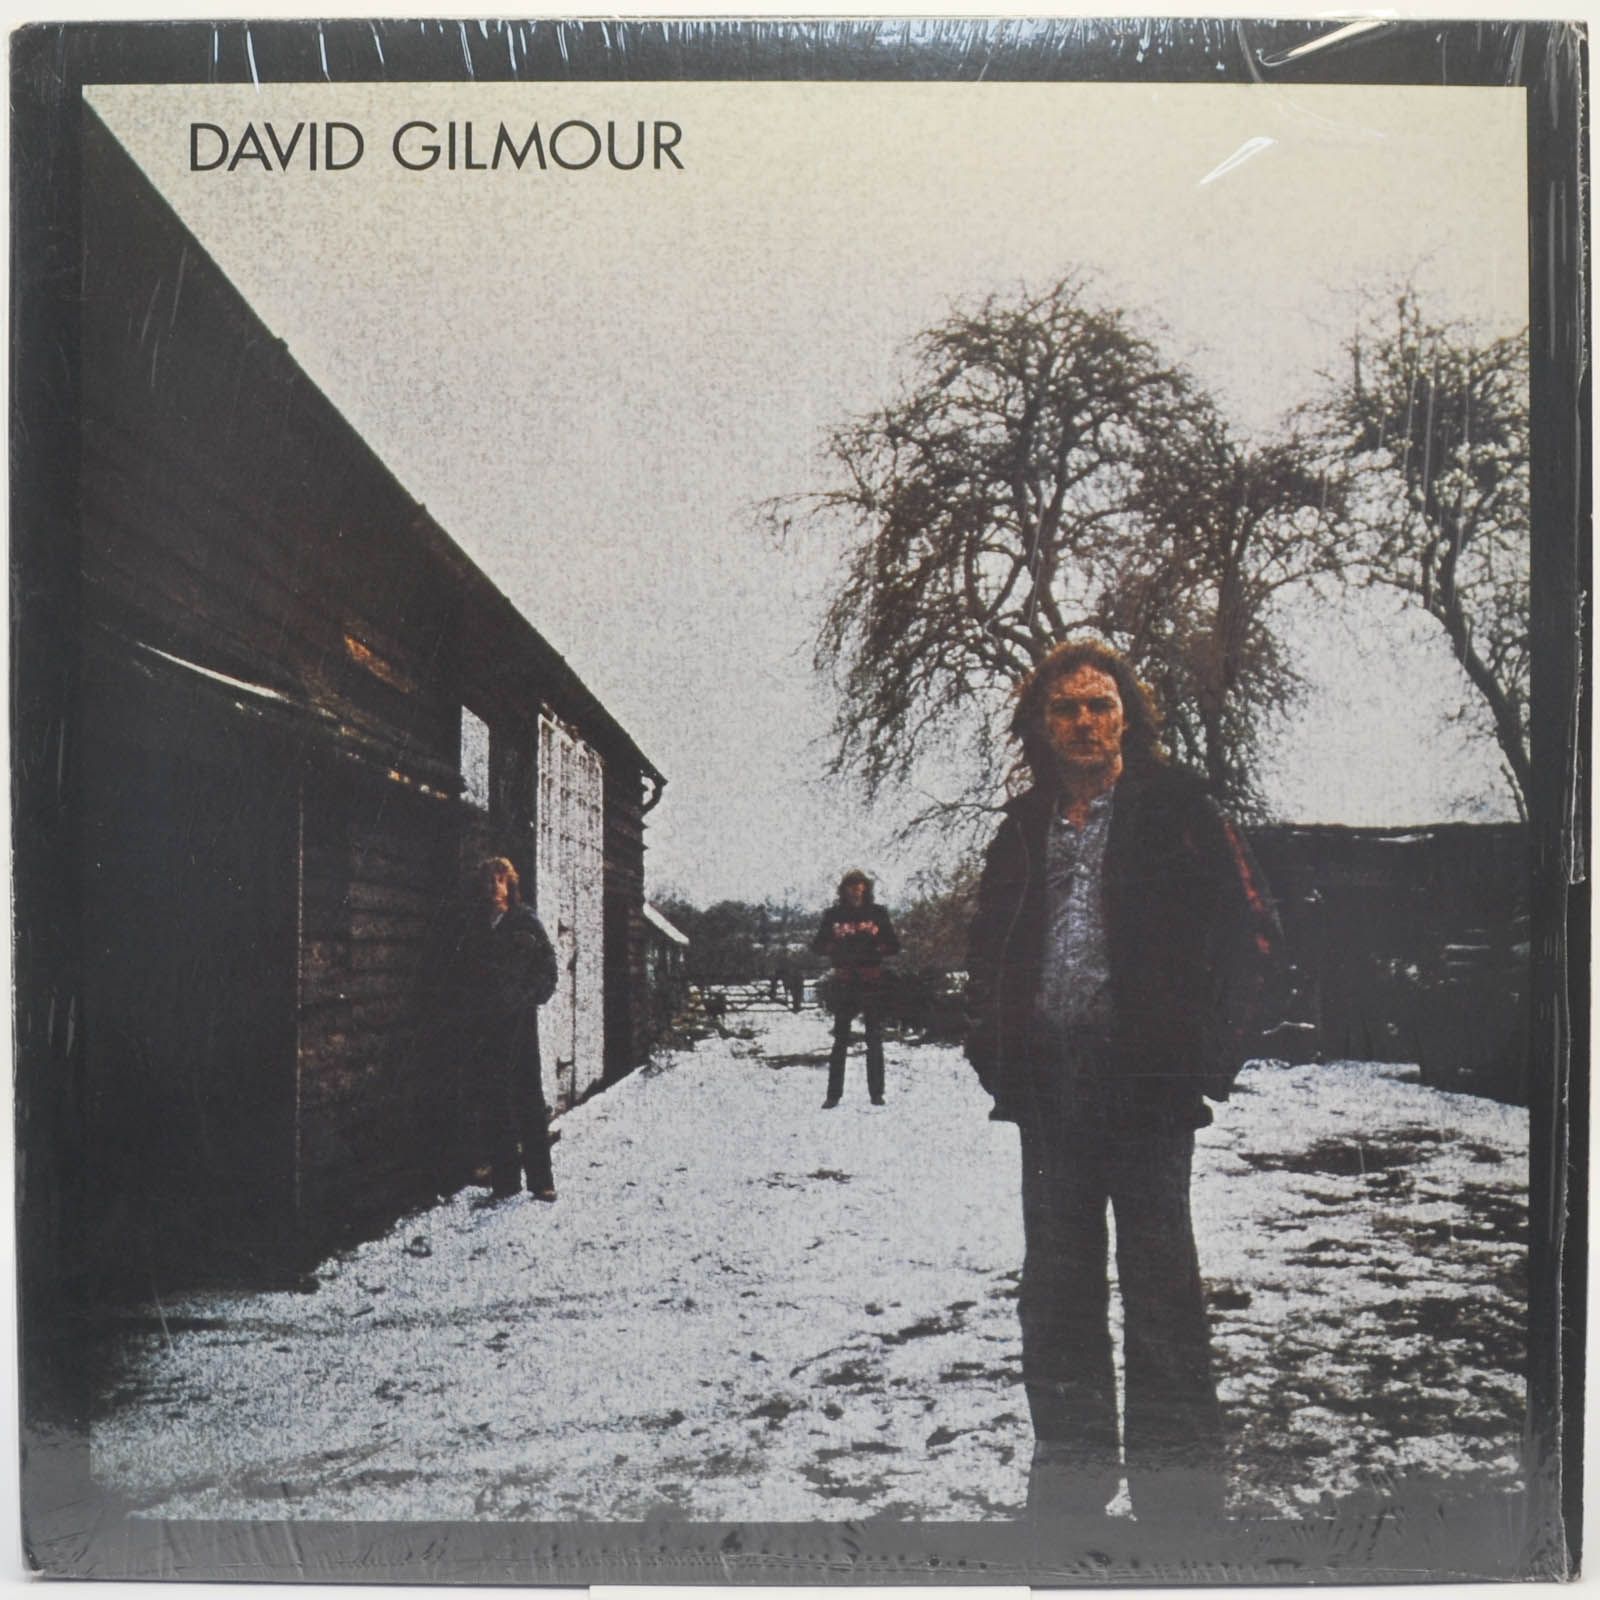 David Gilmour — David Gilmour (USA), 1978